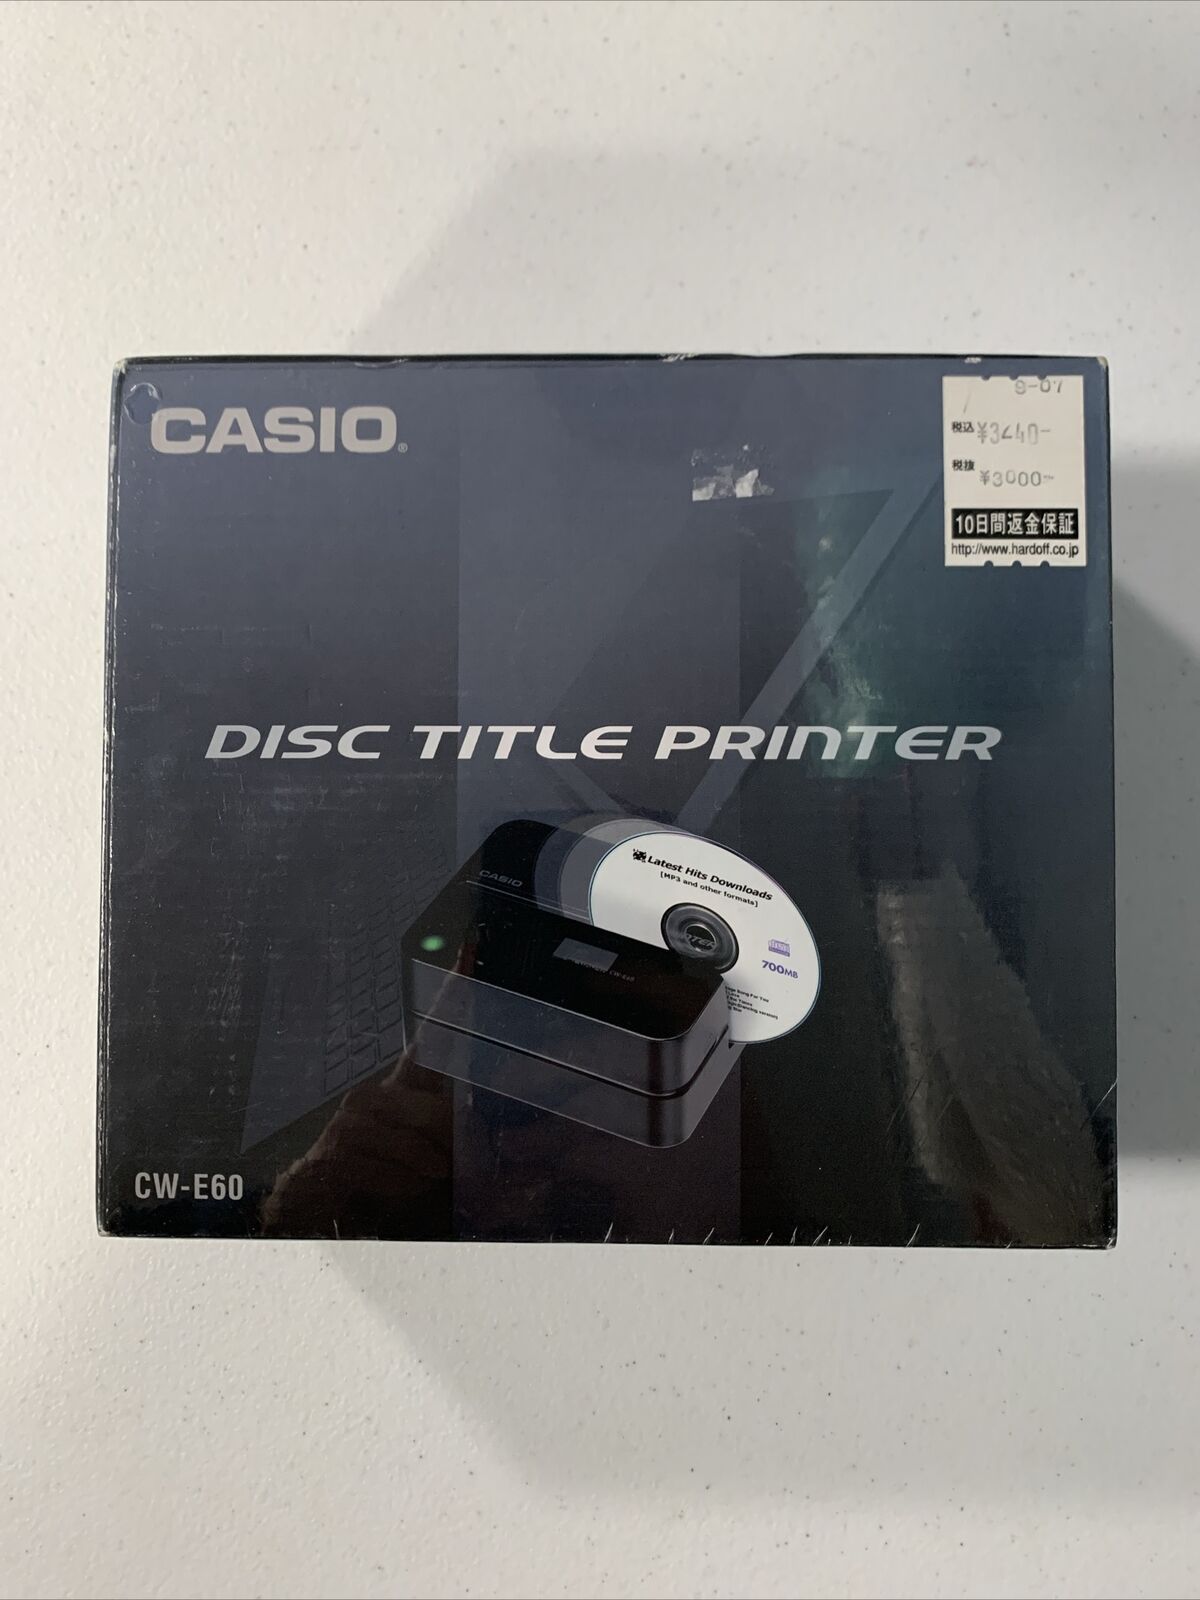 New Casio CW-E60 CD DVD Disc Title Printer Japanese Sealed